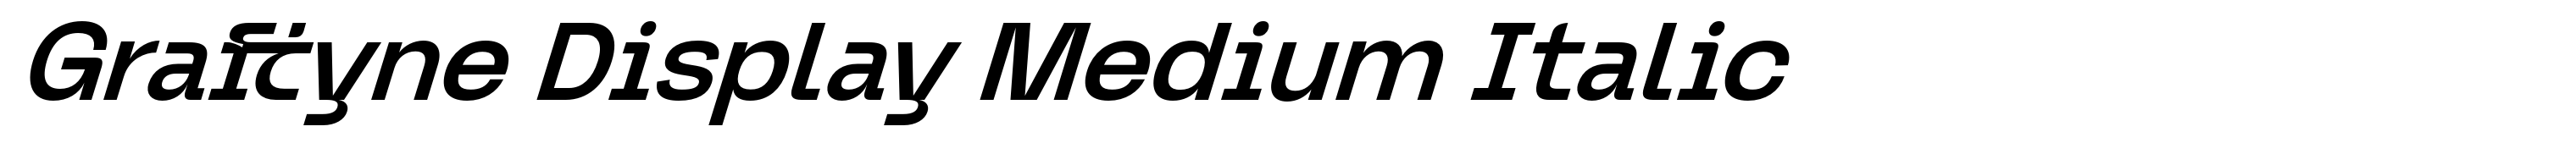 Graftyne Display Medium Italic